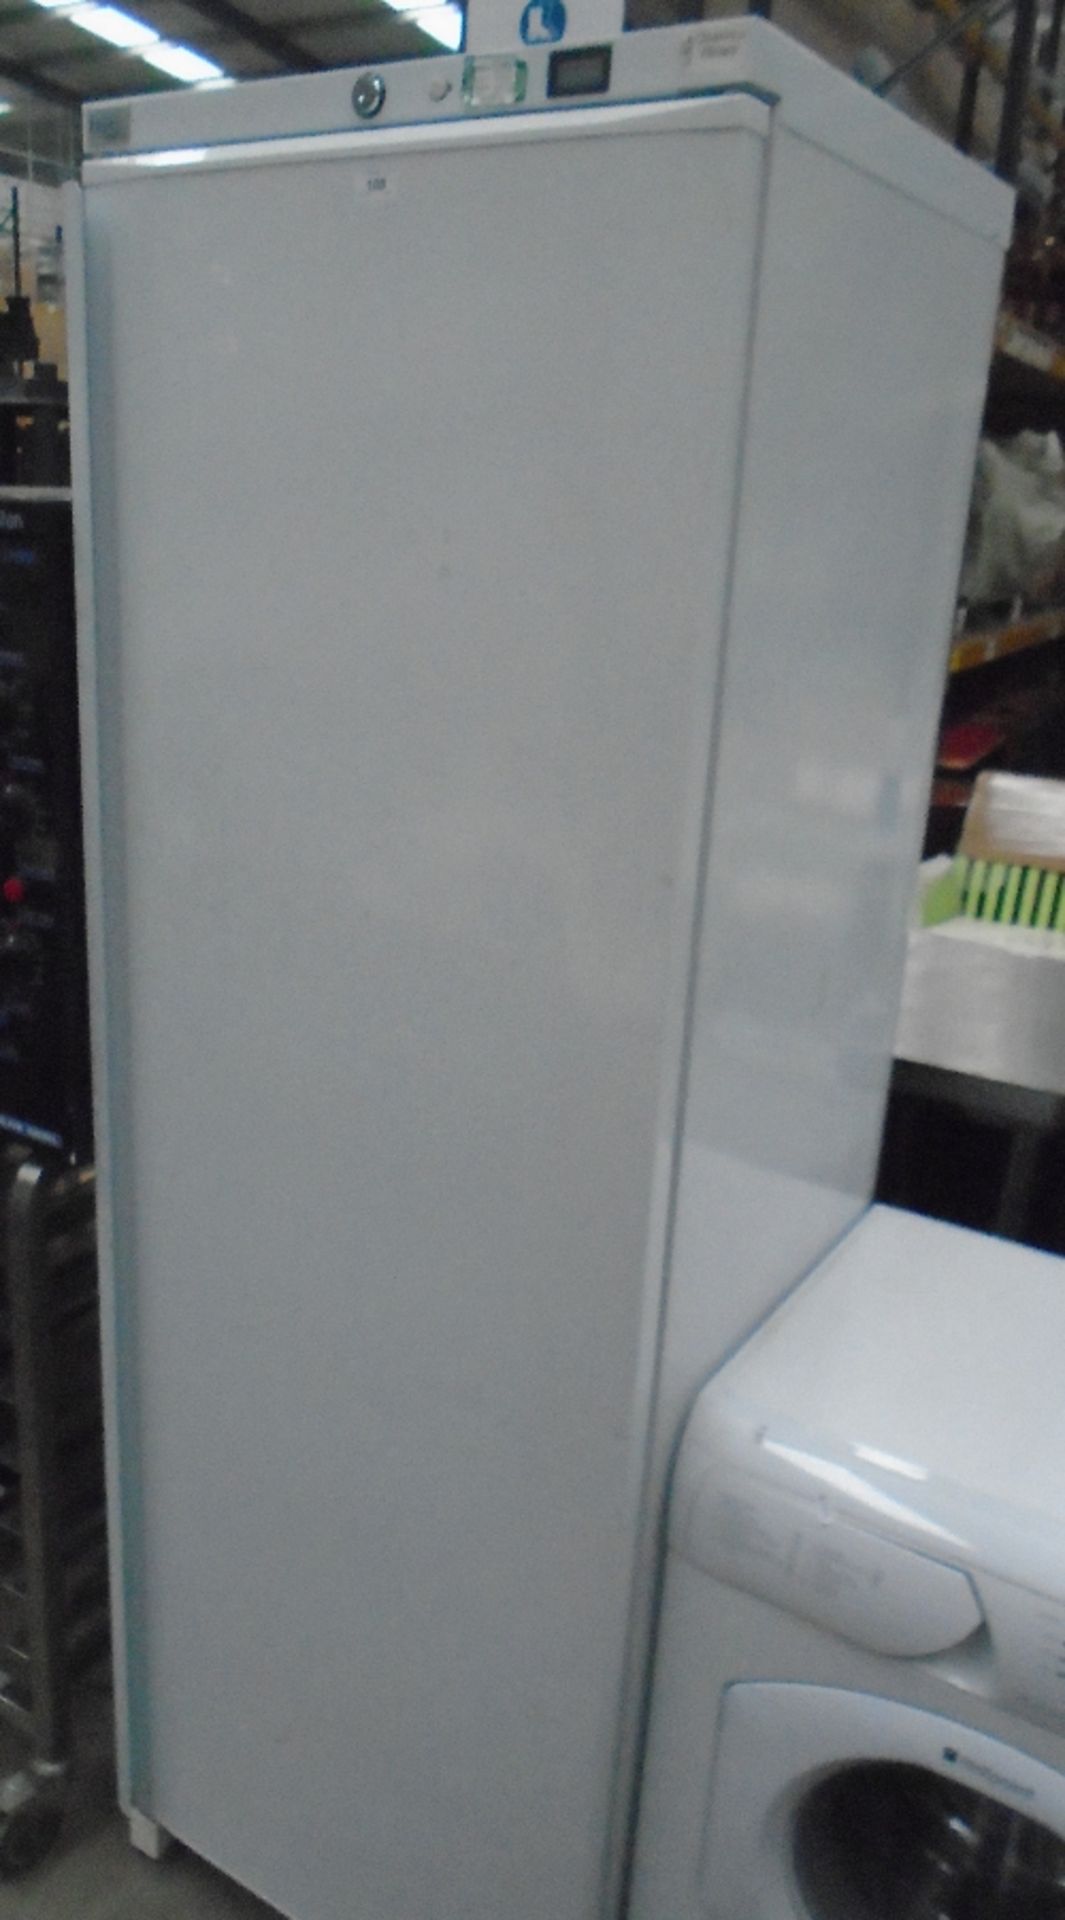 A LEC commercial white upright fridge